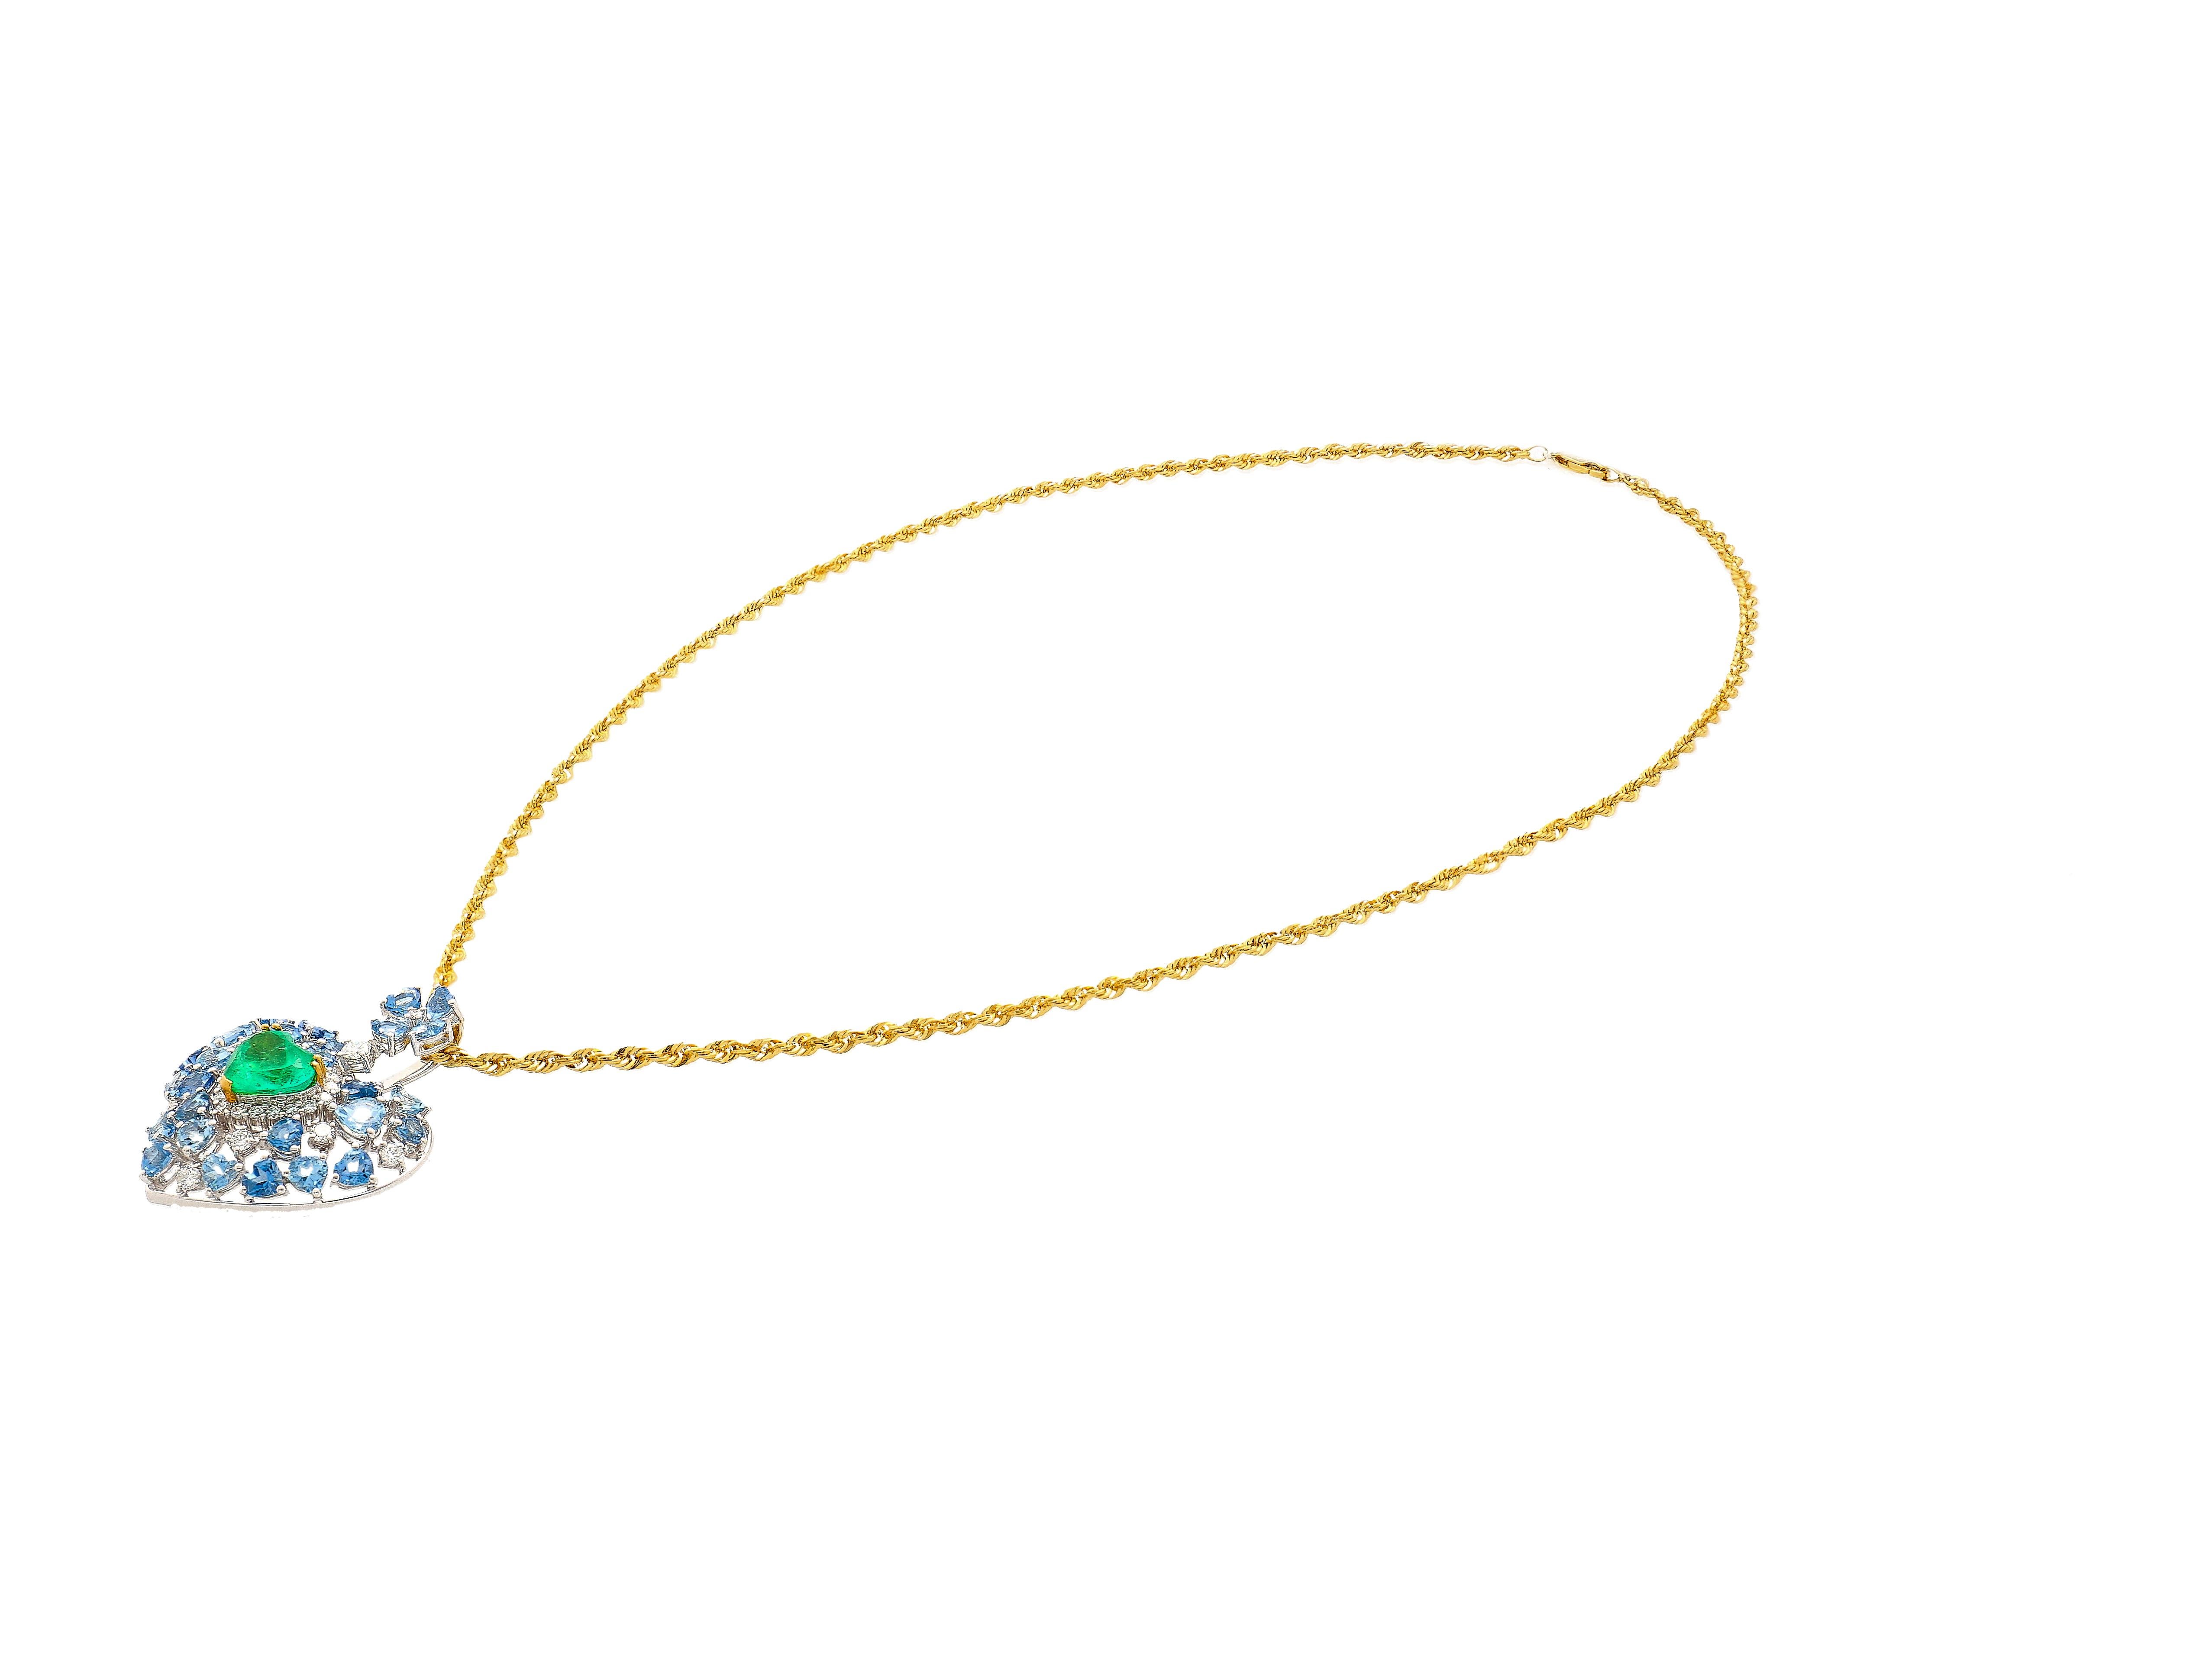 10 Carat Heart-Shape Colombian Emerald, Aquamarine, and Diamond 18K Necklace For Sale 7